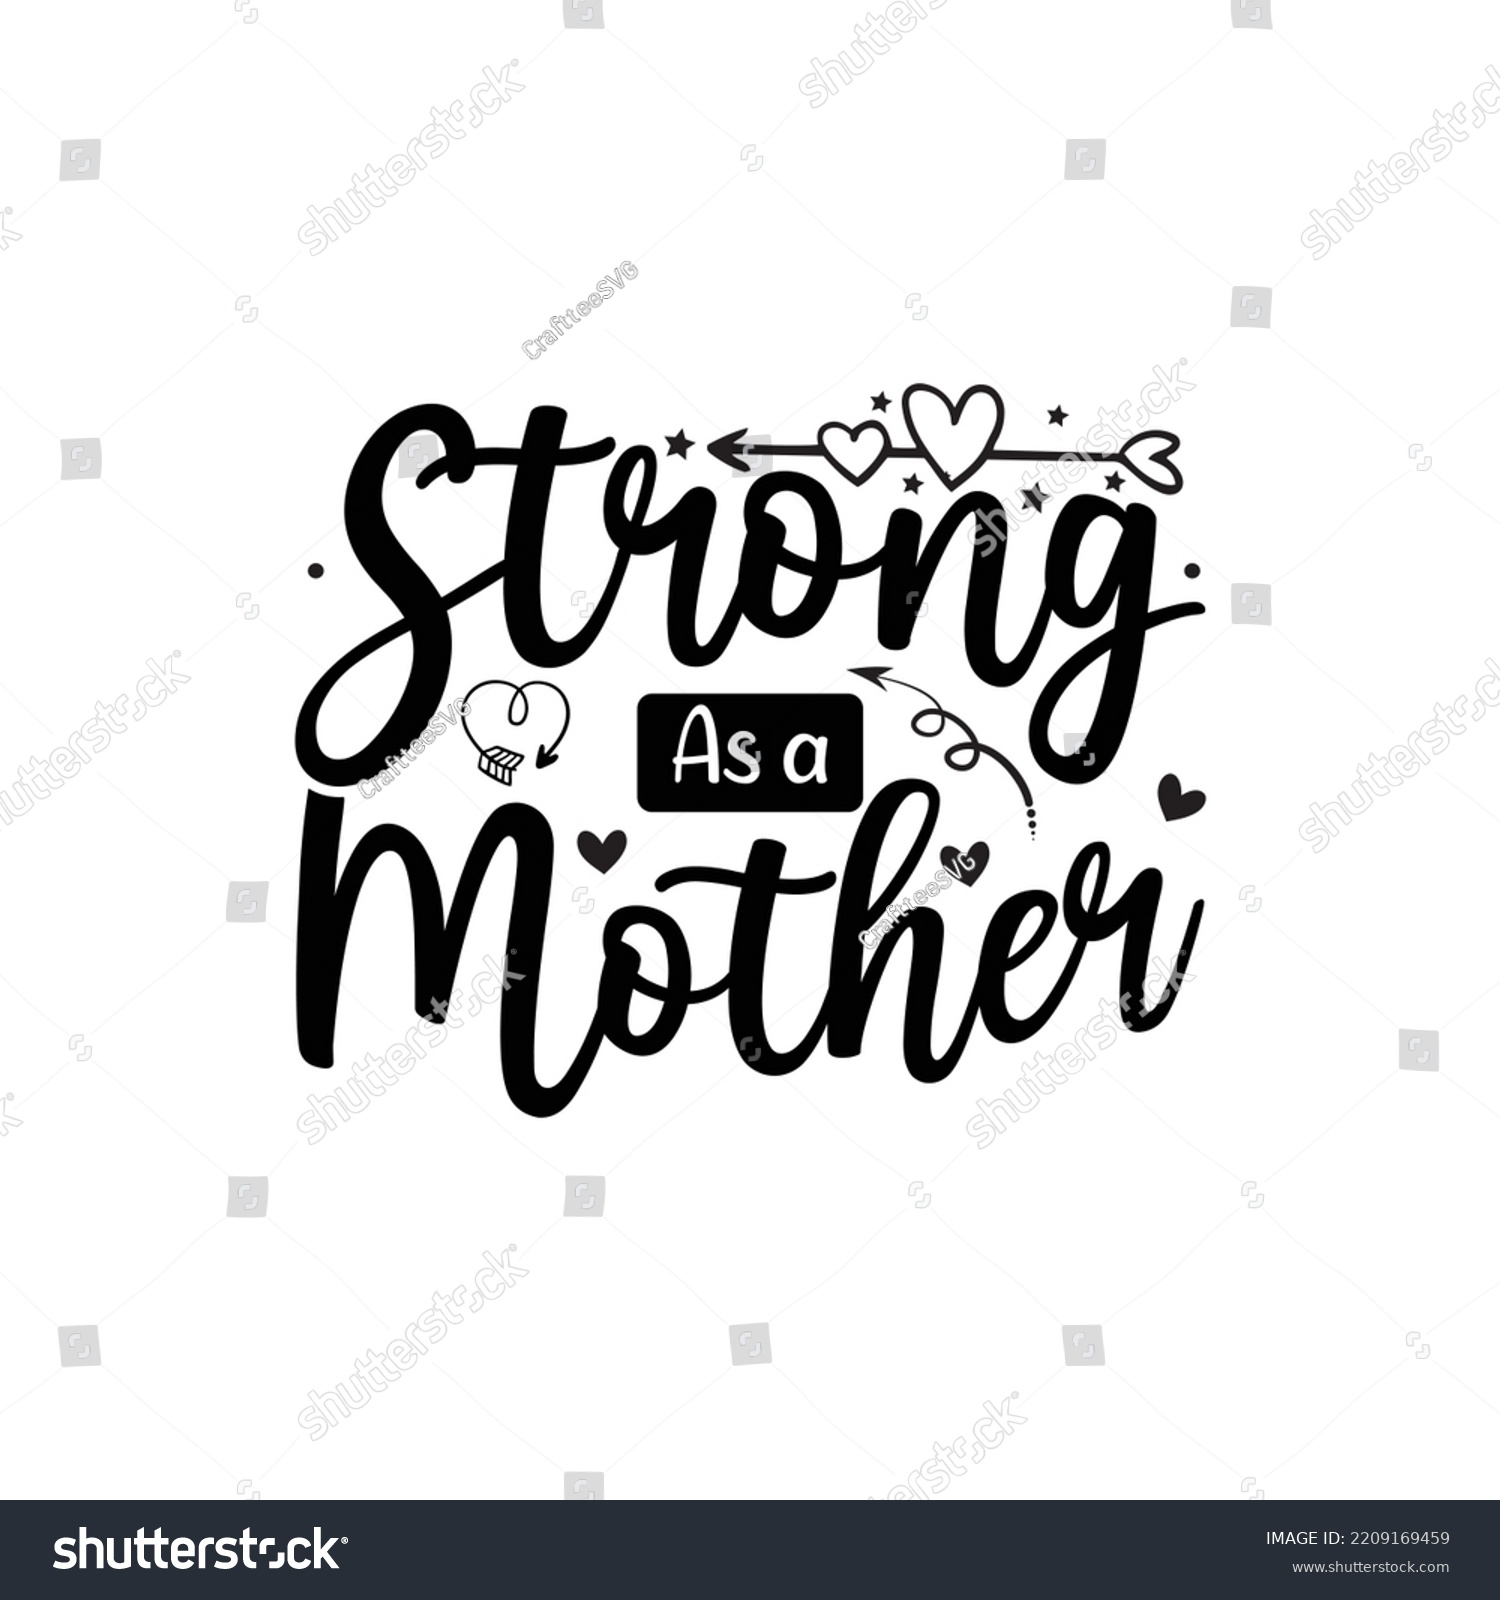 SVG of Strong as a Mother Shirt, Motherhood Tank Top, New Mom T shirt, Strong Mom Shirt, Tired as a Mother Shirt, Mother's Day Gift svg